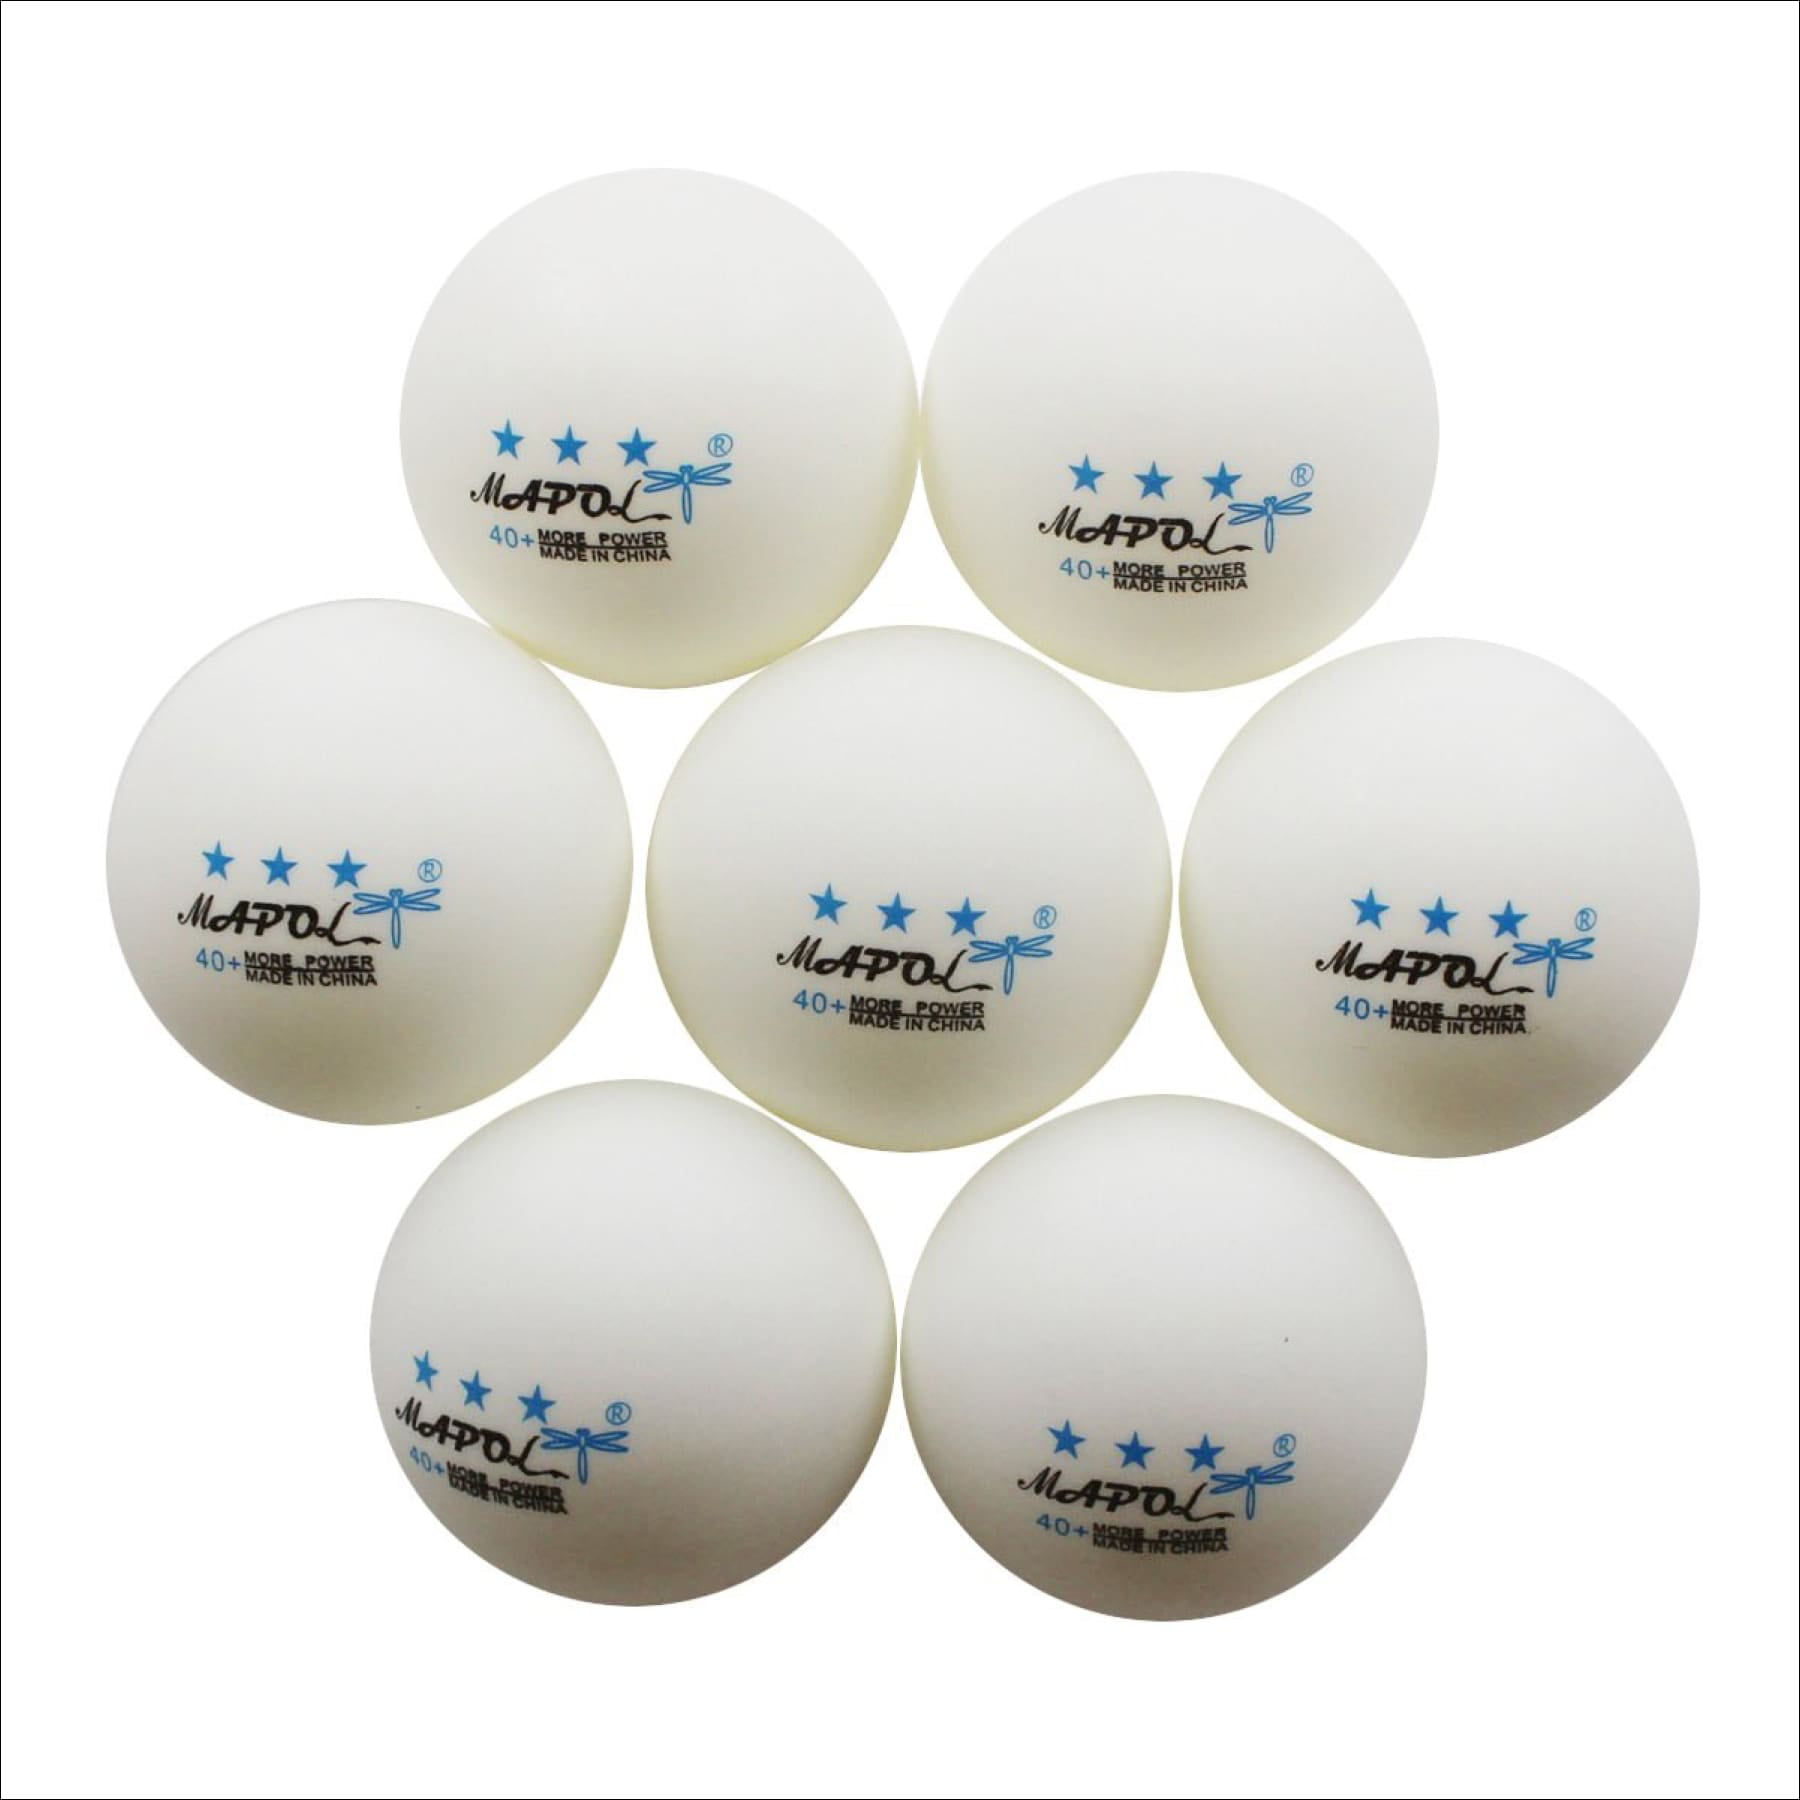 Mapol 50 Blanc 3-Star Balles de tennis de table Premium formation Ping Pong Balls 